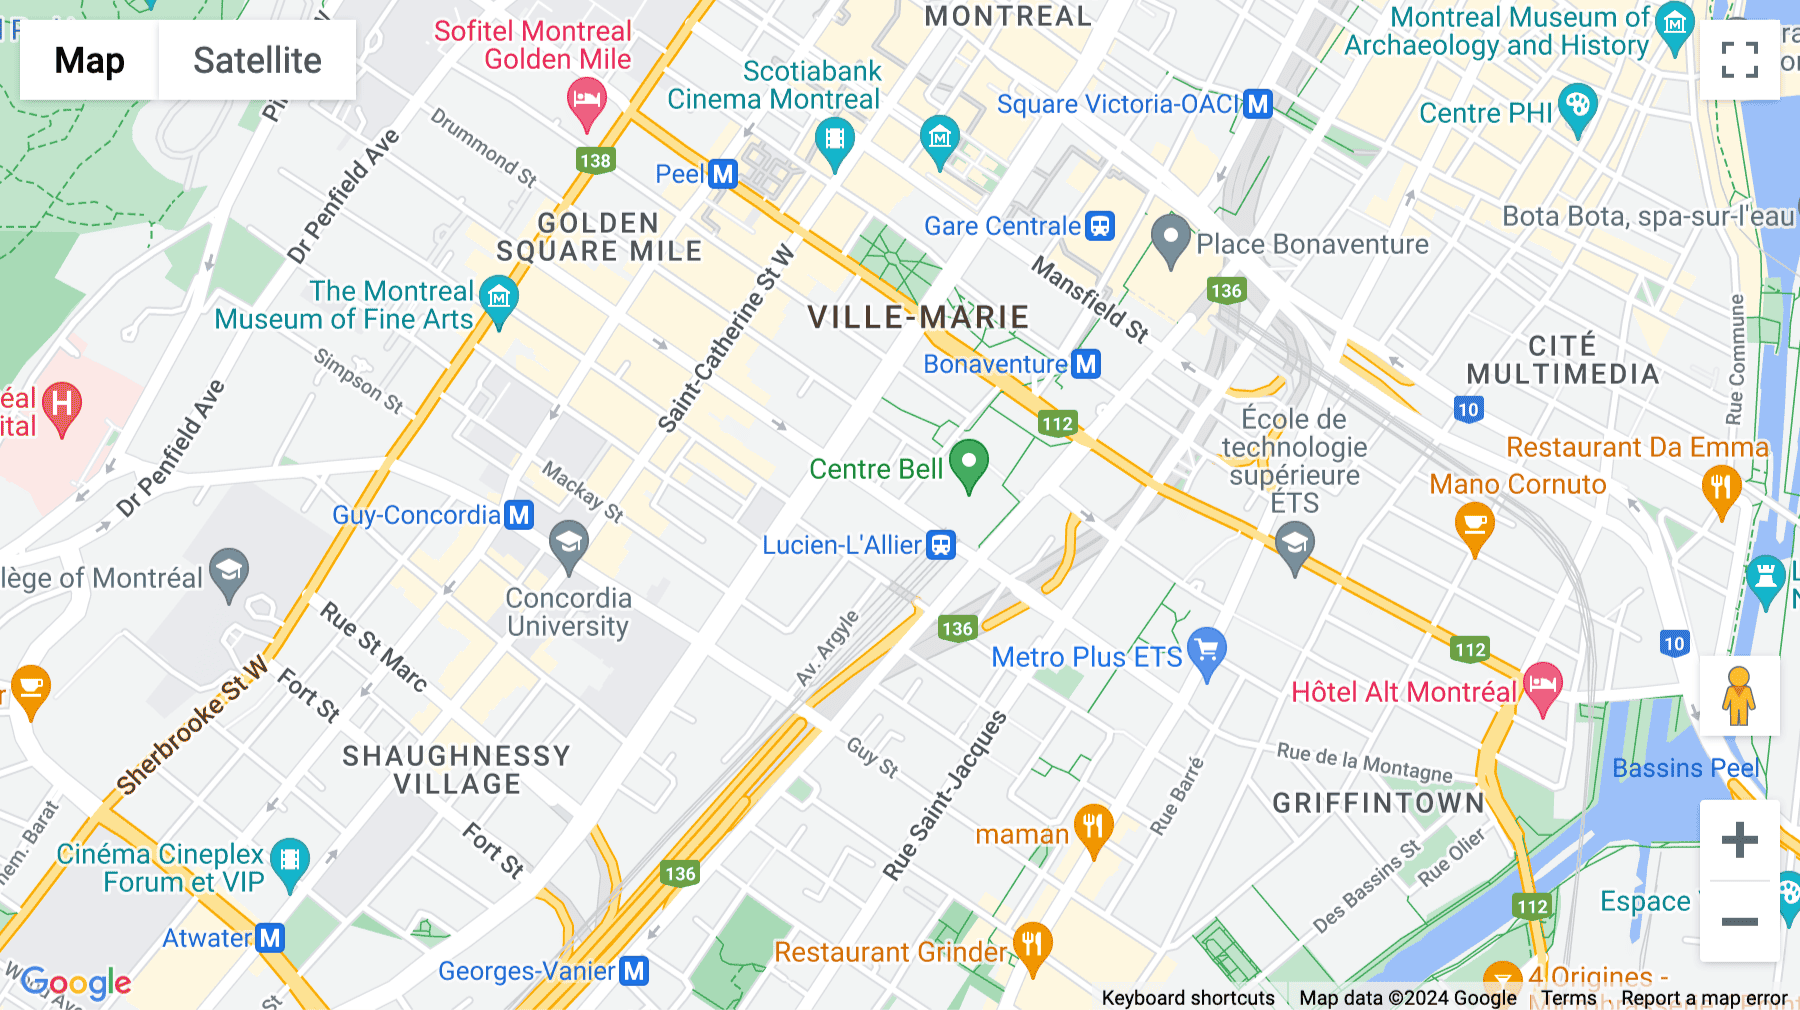 Click for interative map of L'Avenue, 1275 Avenue des Canadiens, Montreal, Montreal